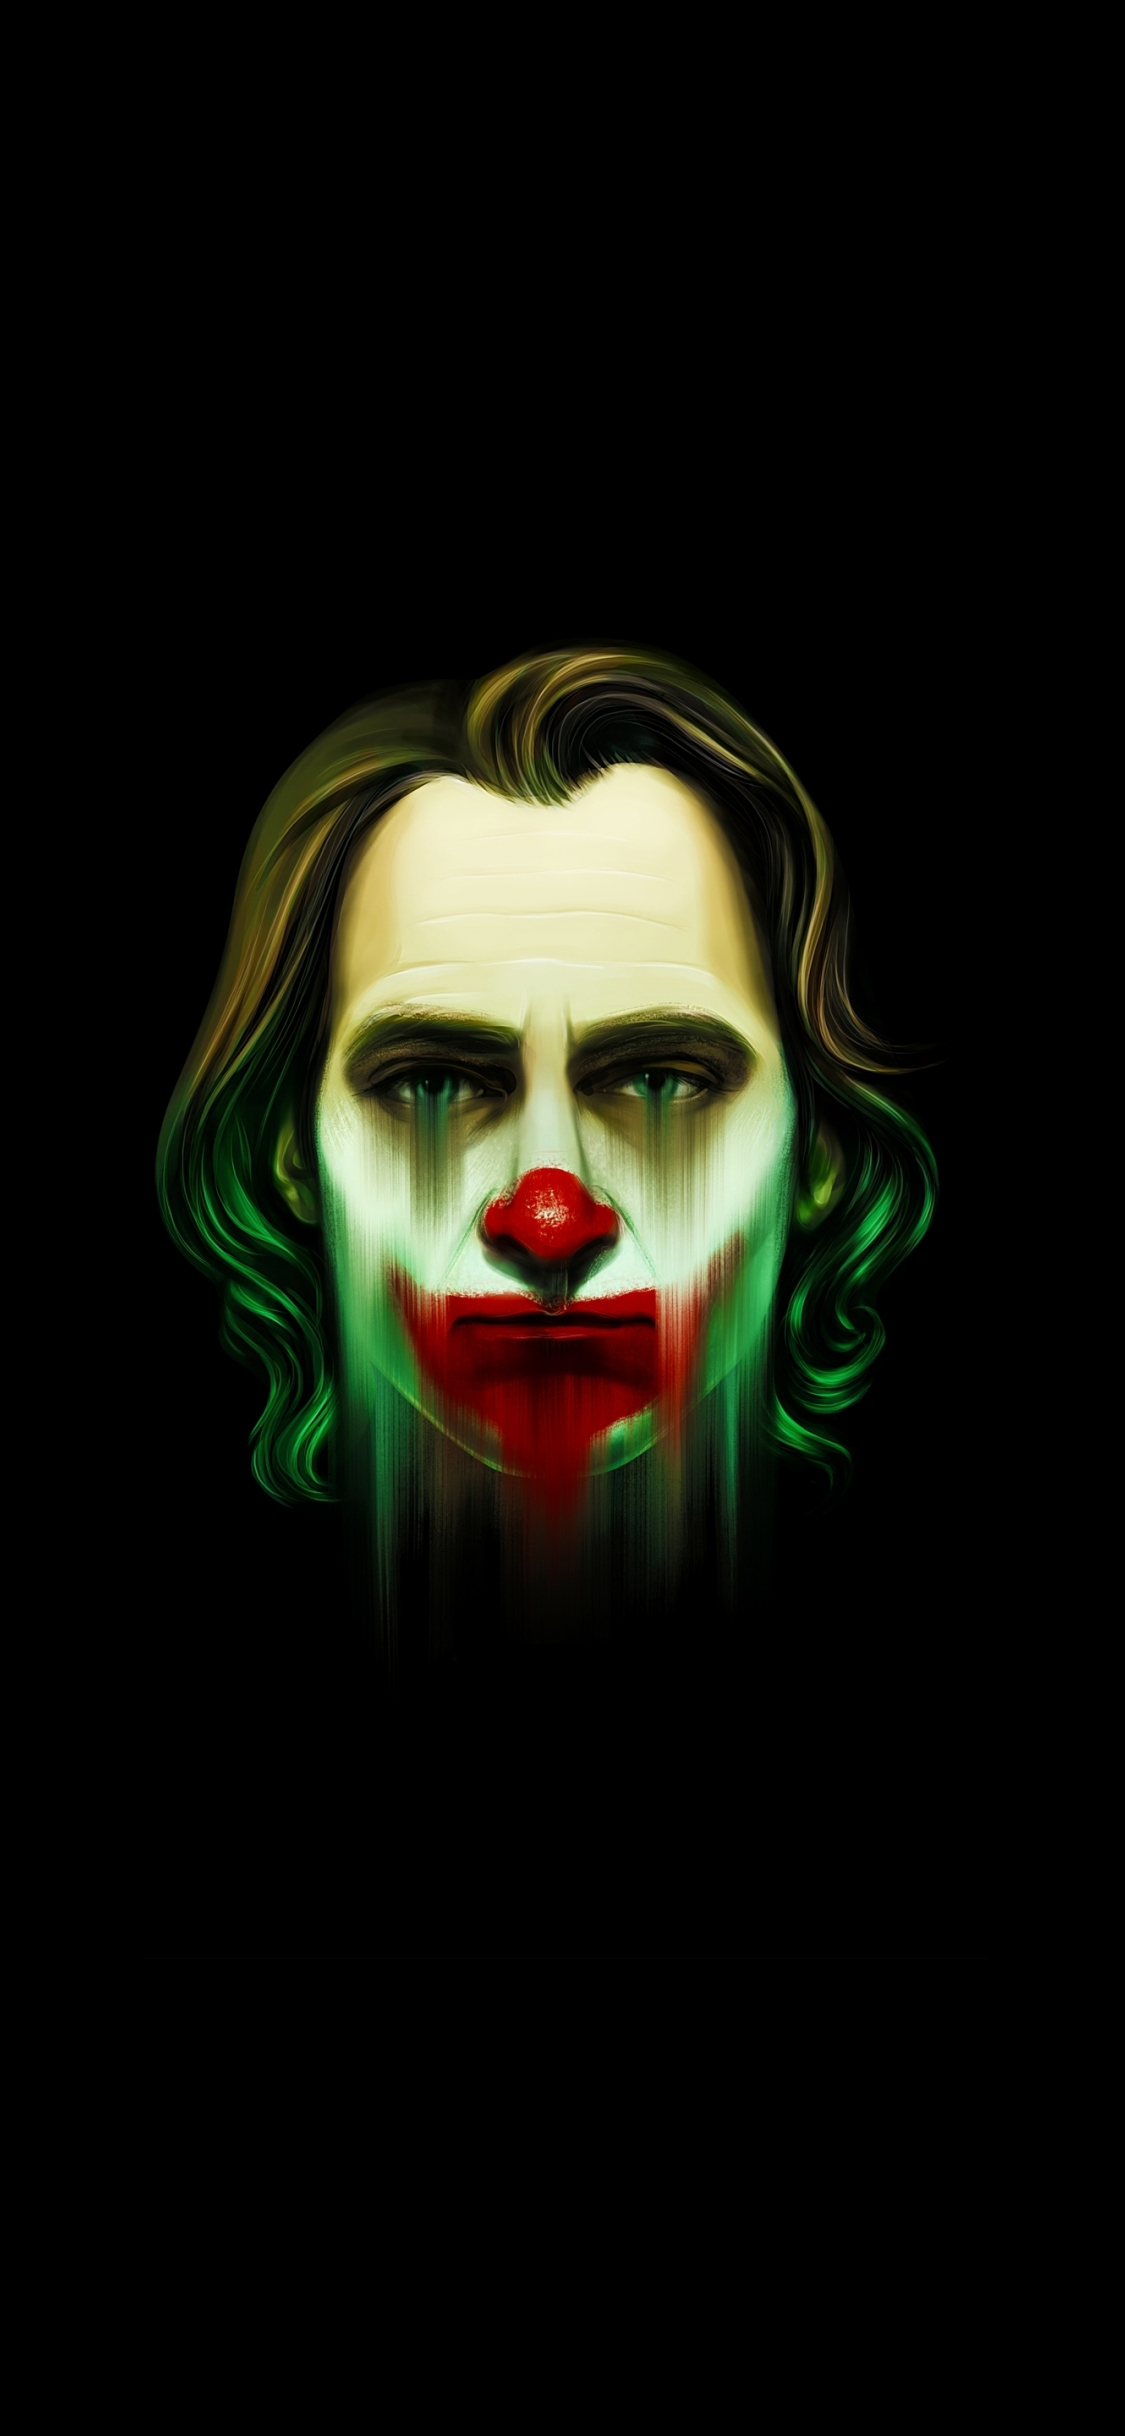 Download Joker 2019 Artwork Wallpaper | Wallpapers.com